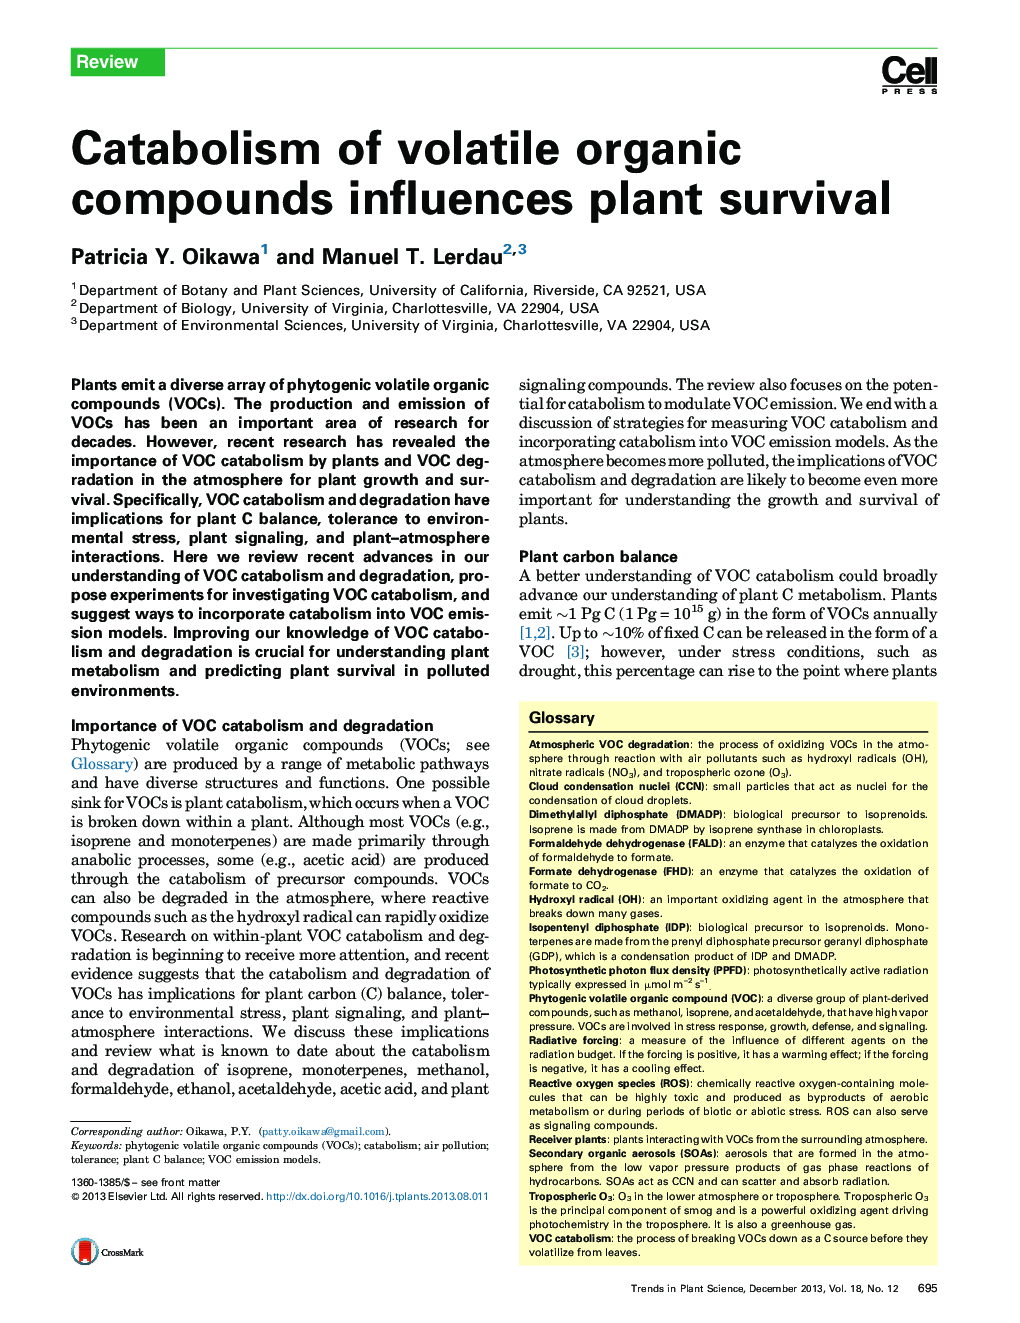 Catabolism of volatile organic compounds influences plant survival